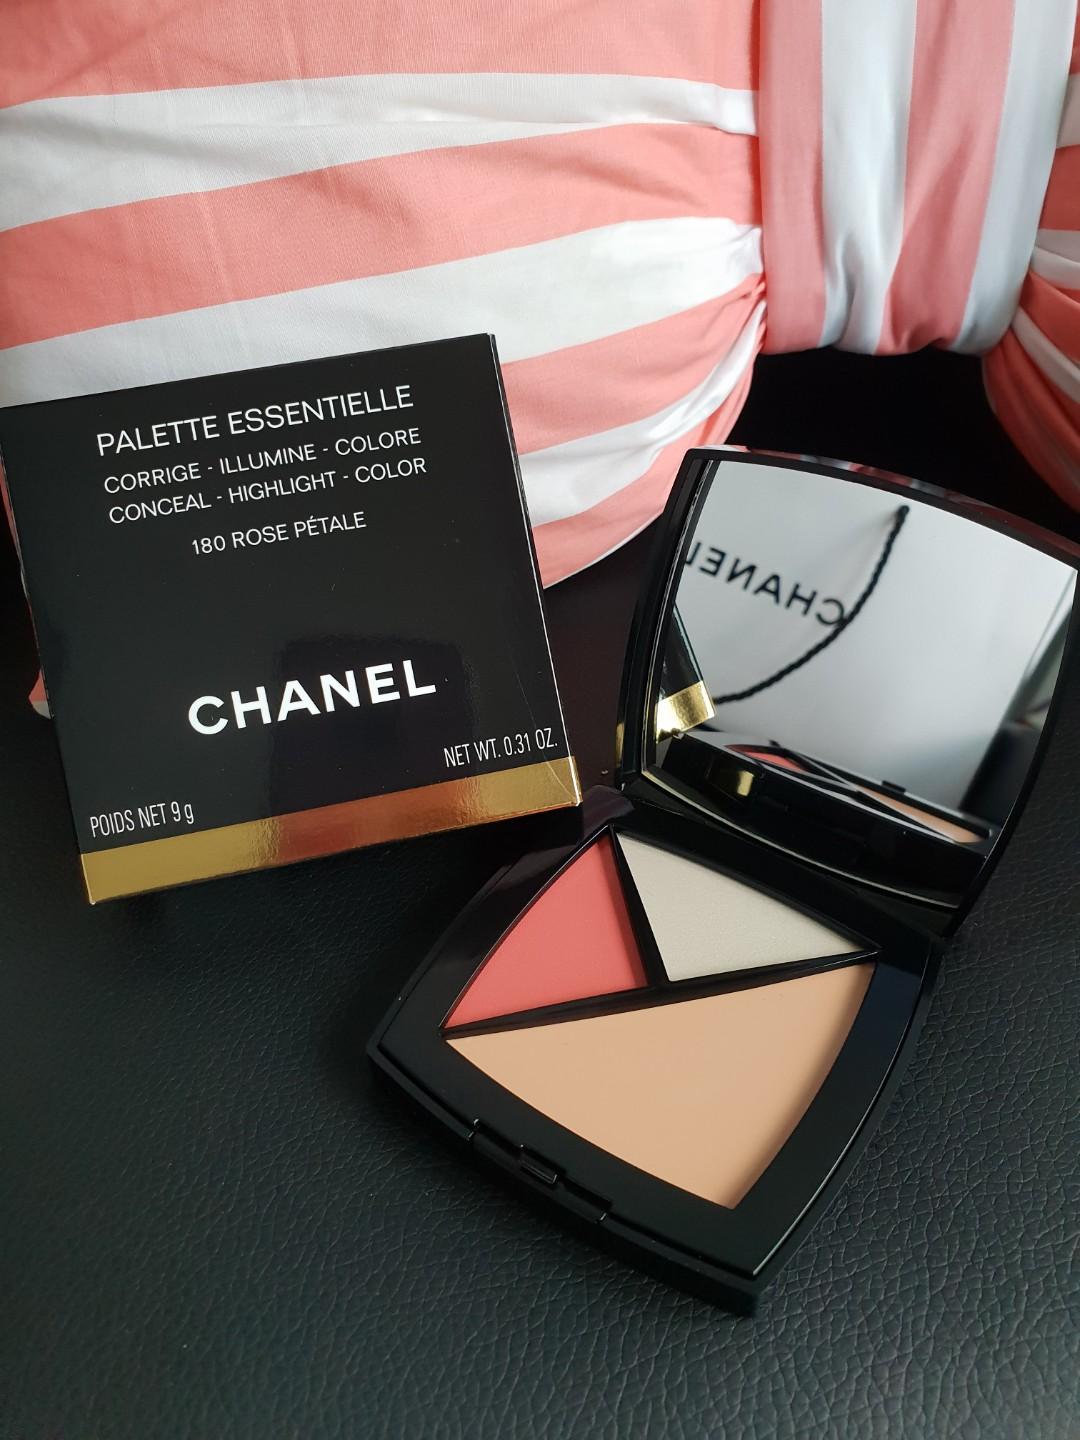 BNWB Chanel Palette Essentielle (180 Rose Petale)